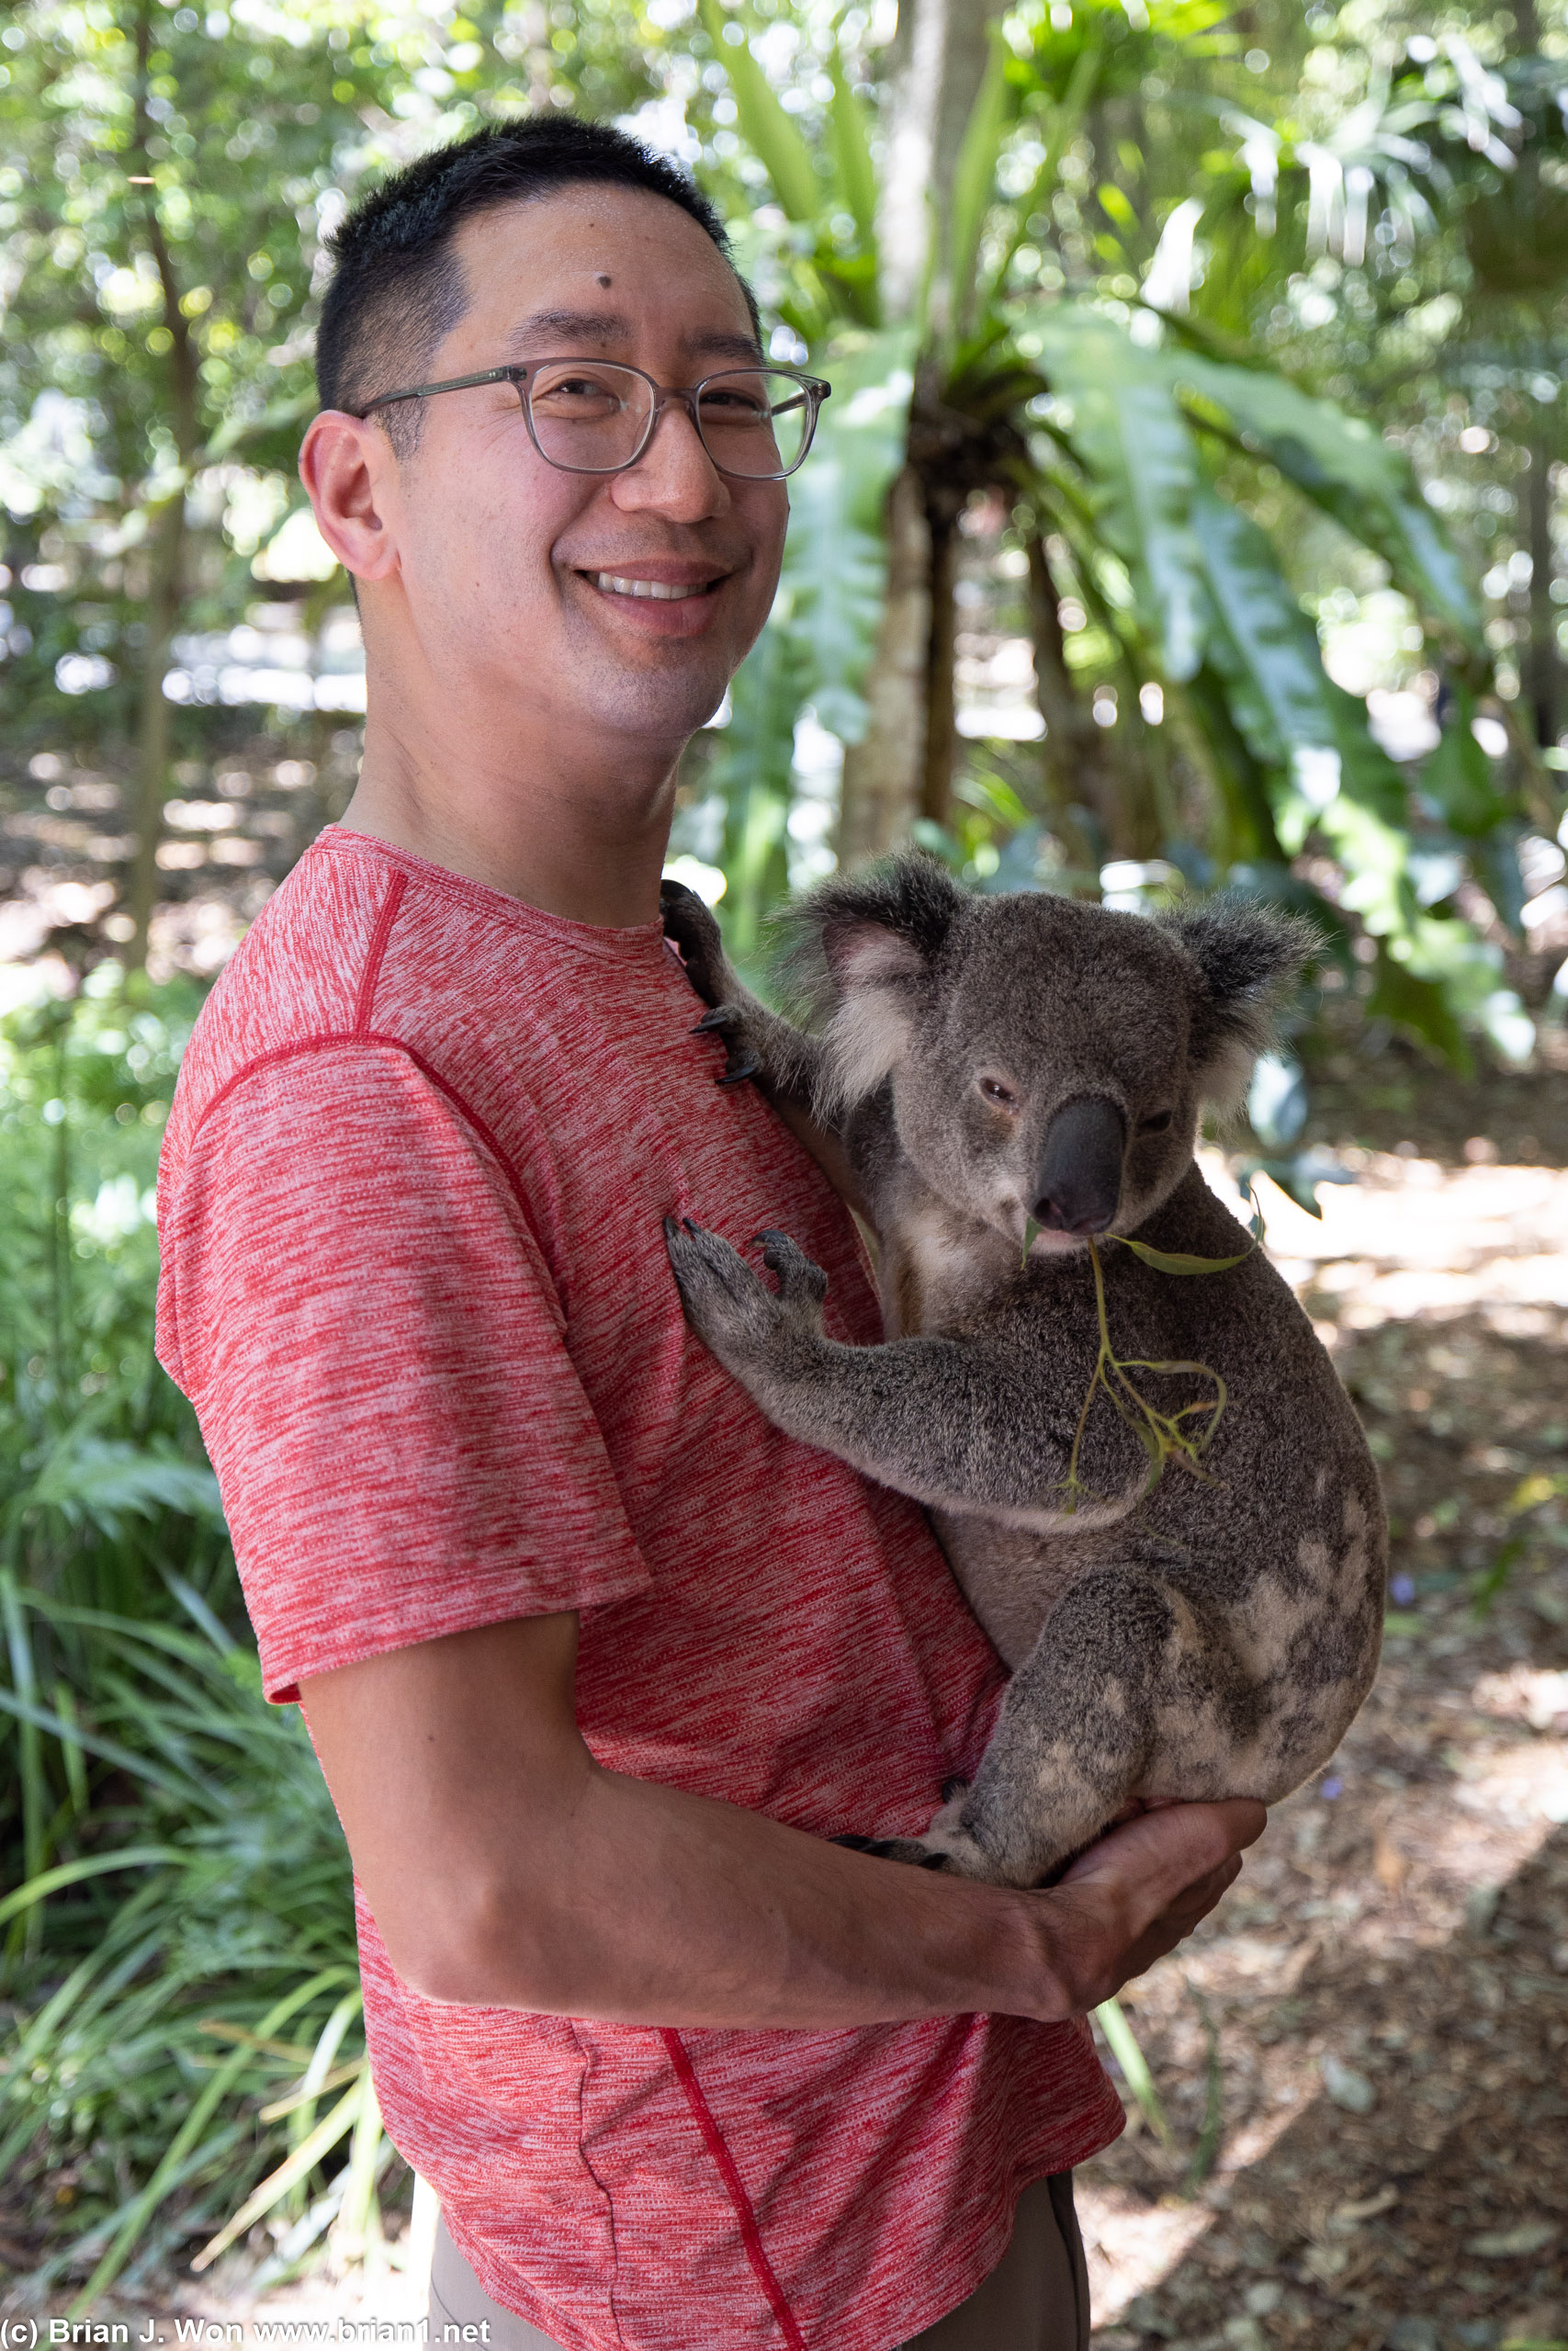 Holding Baron the koala.